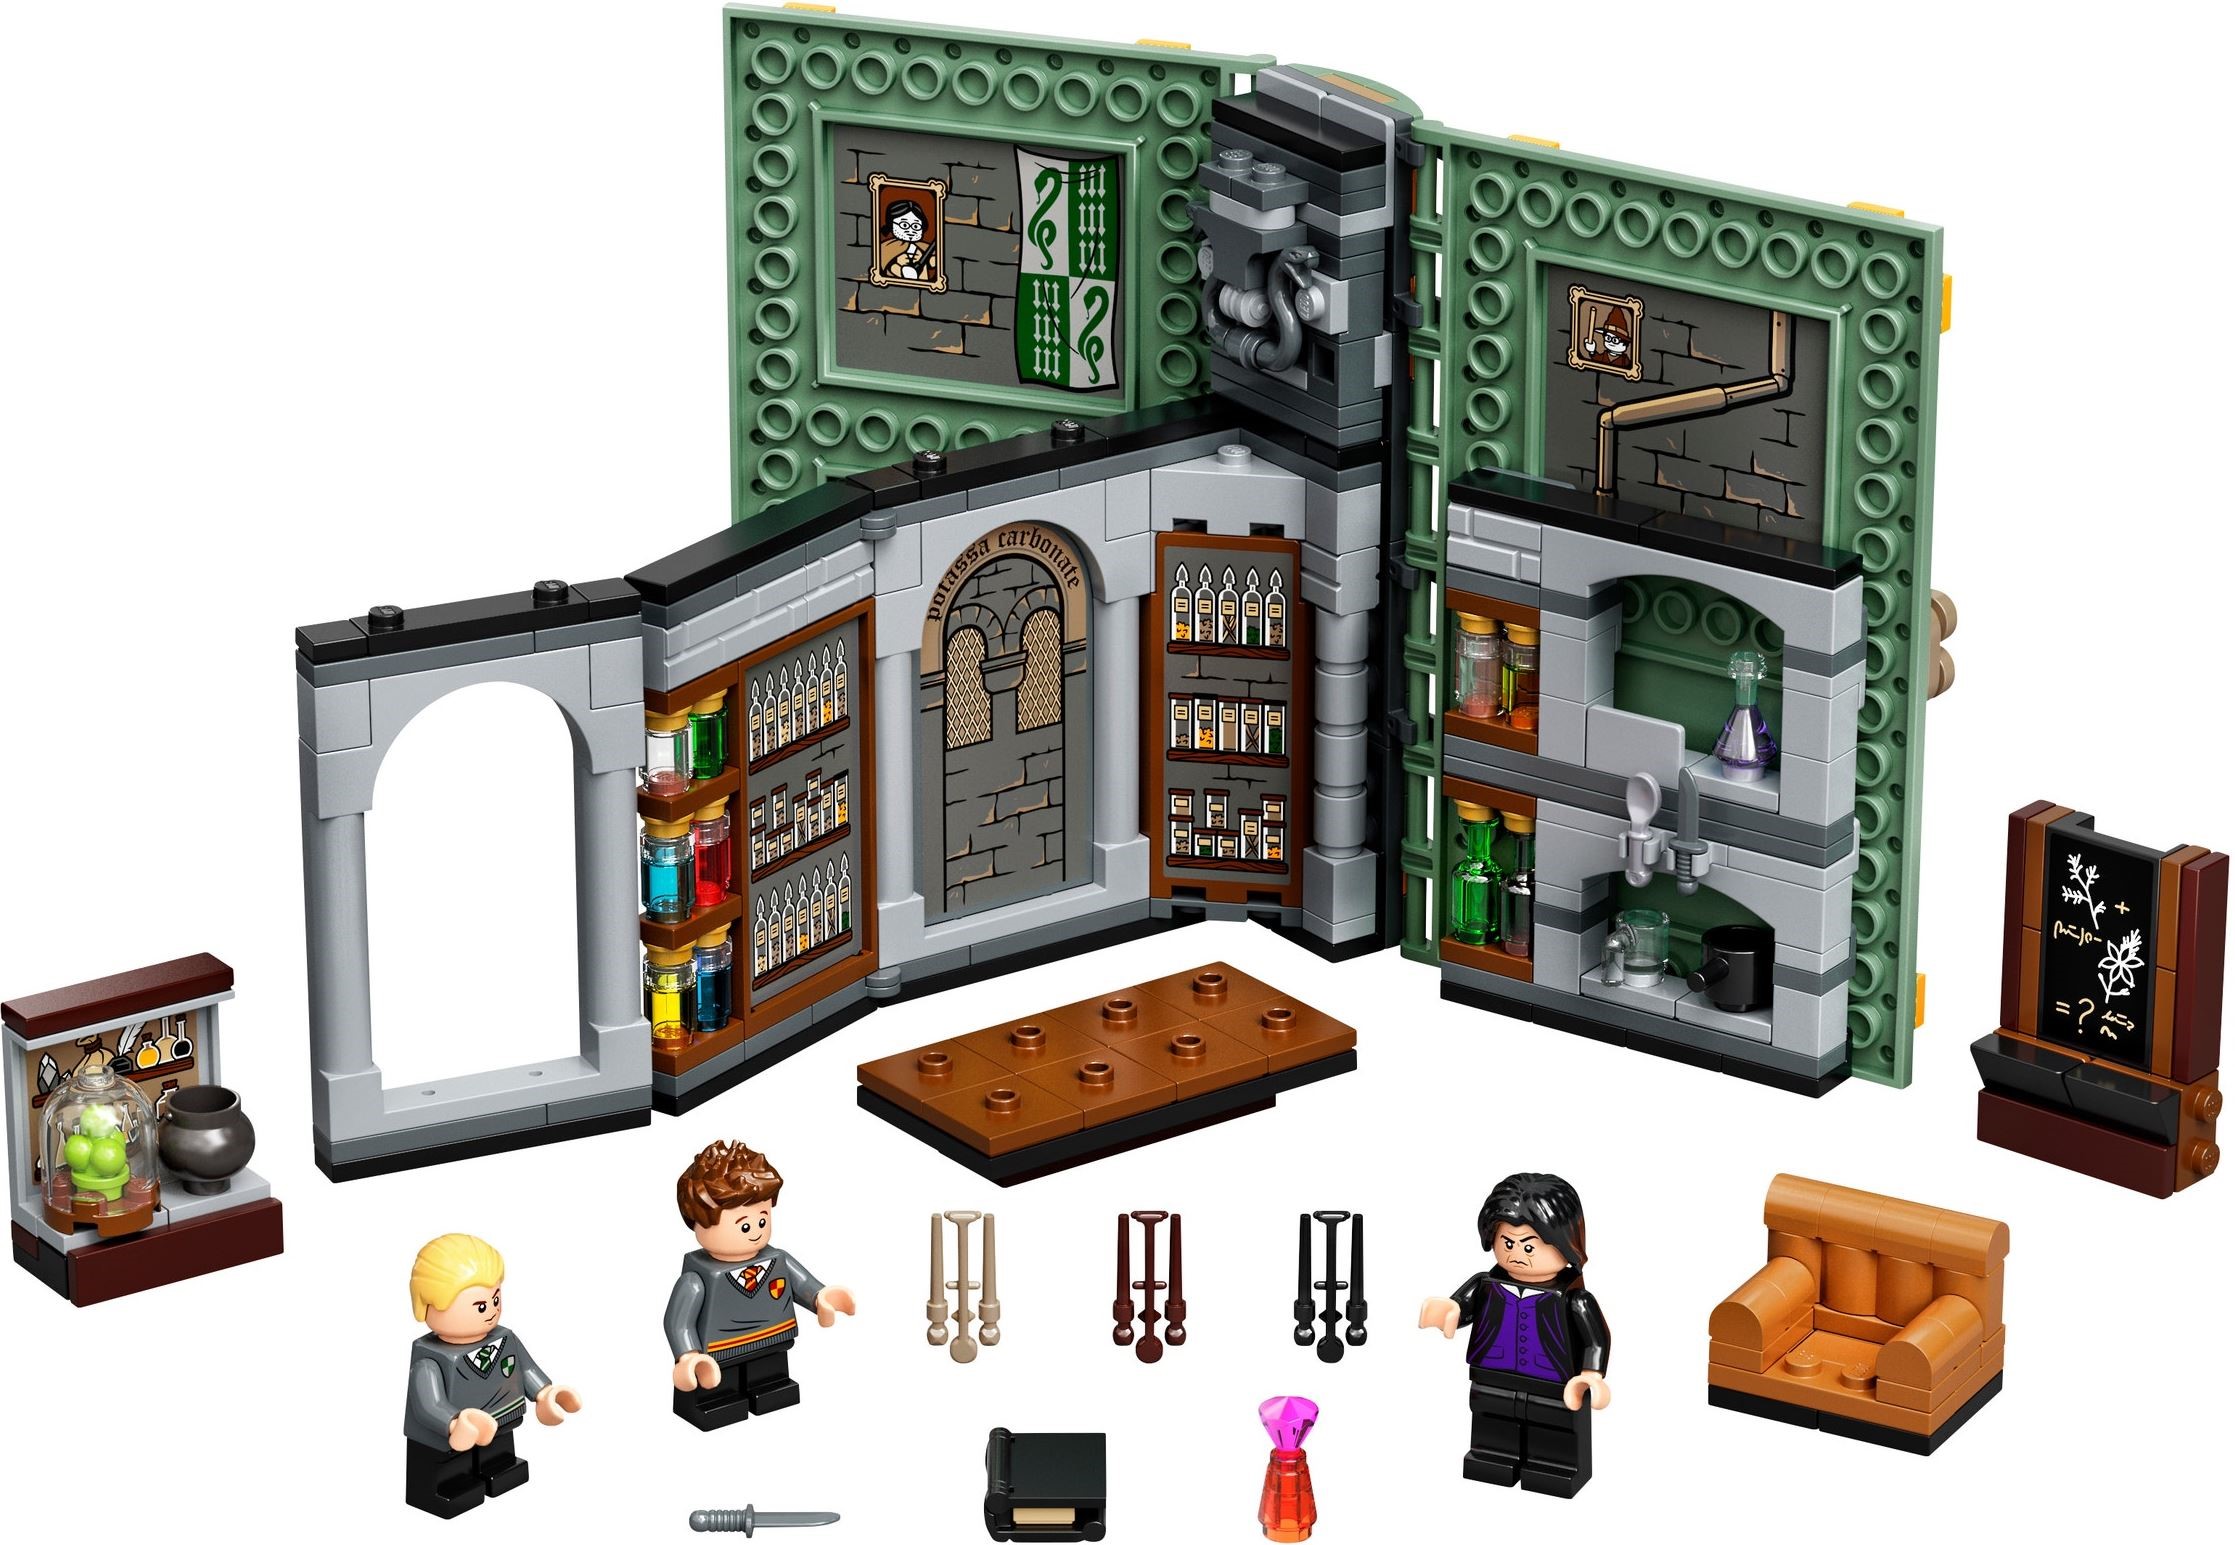 set 76383 Minifigura Lego Harry Potter hp266 Profesor Severus Snape